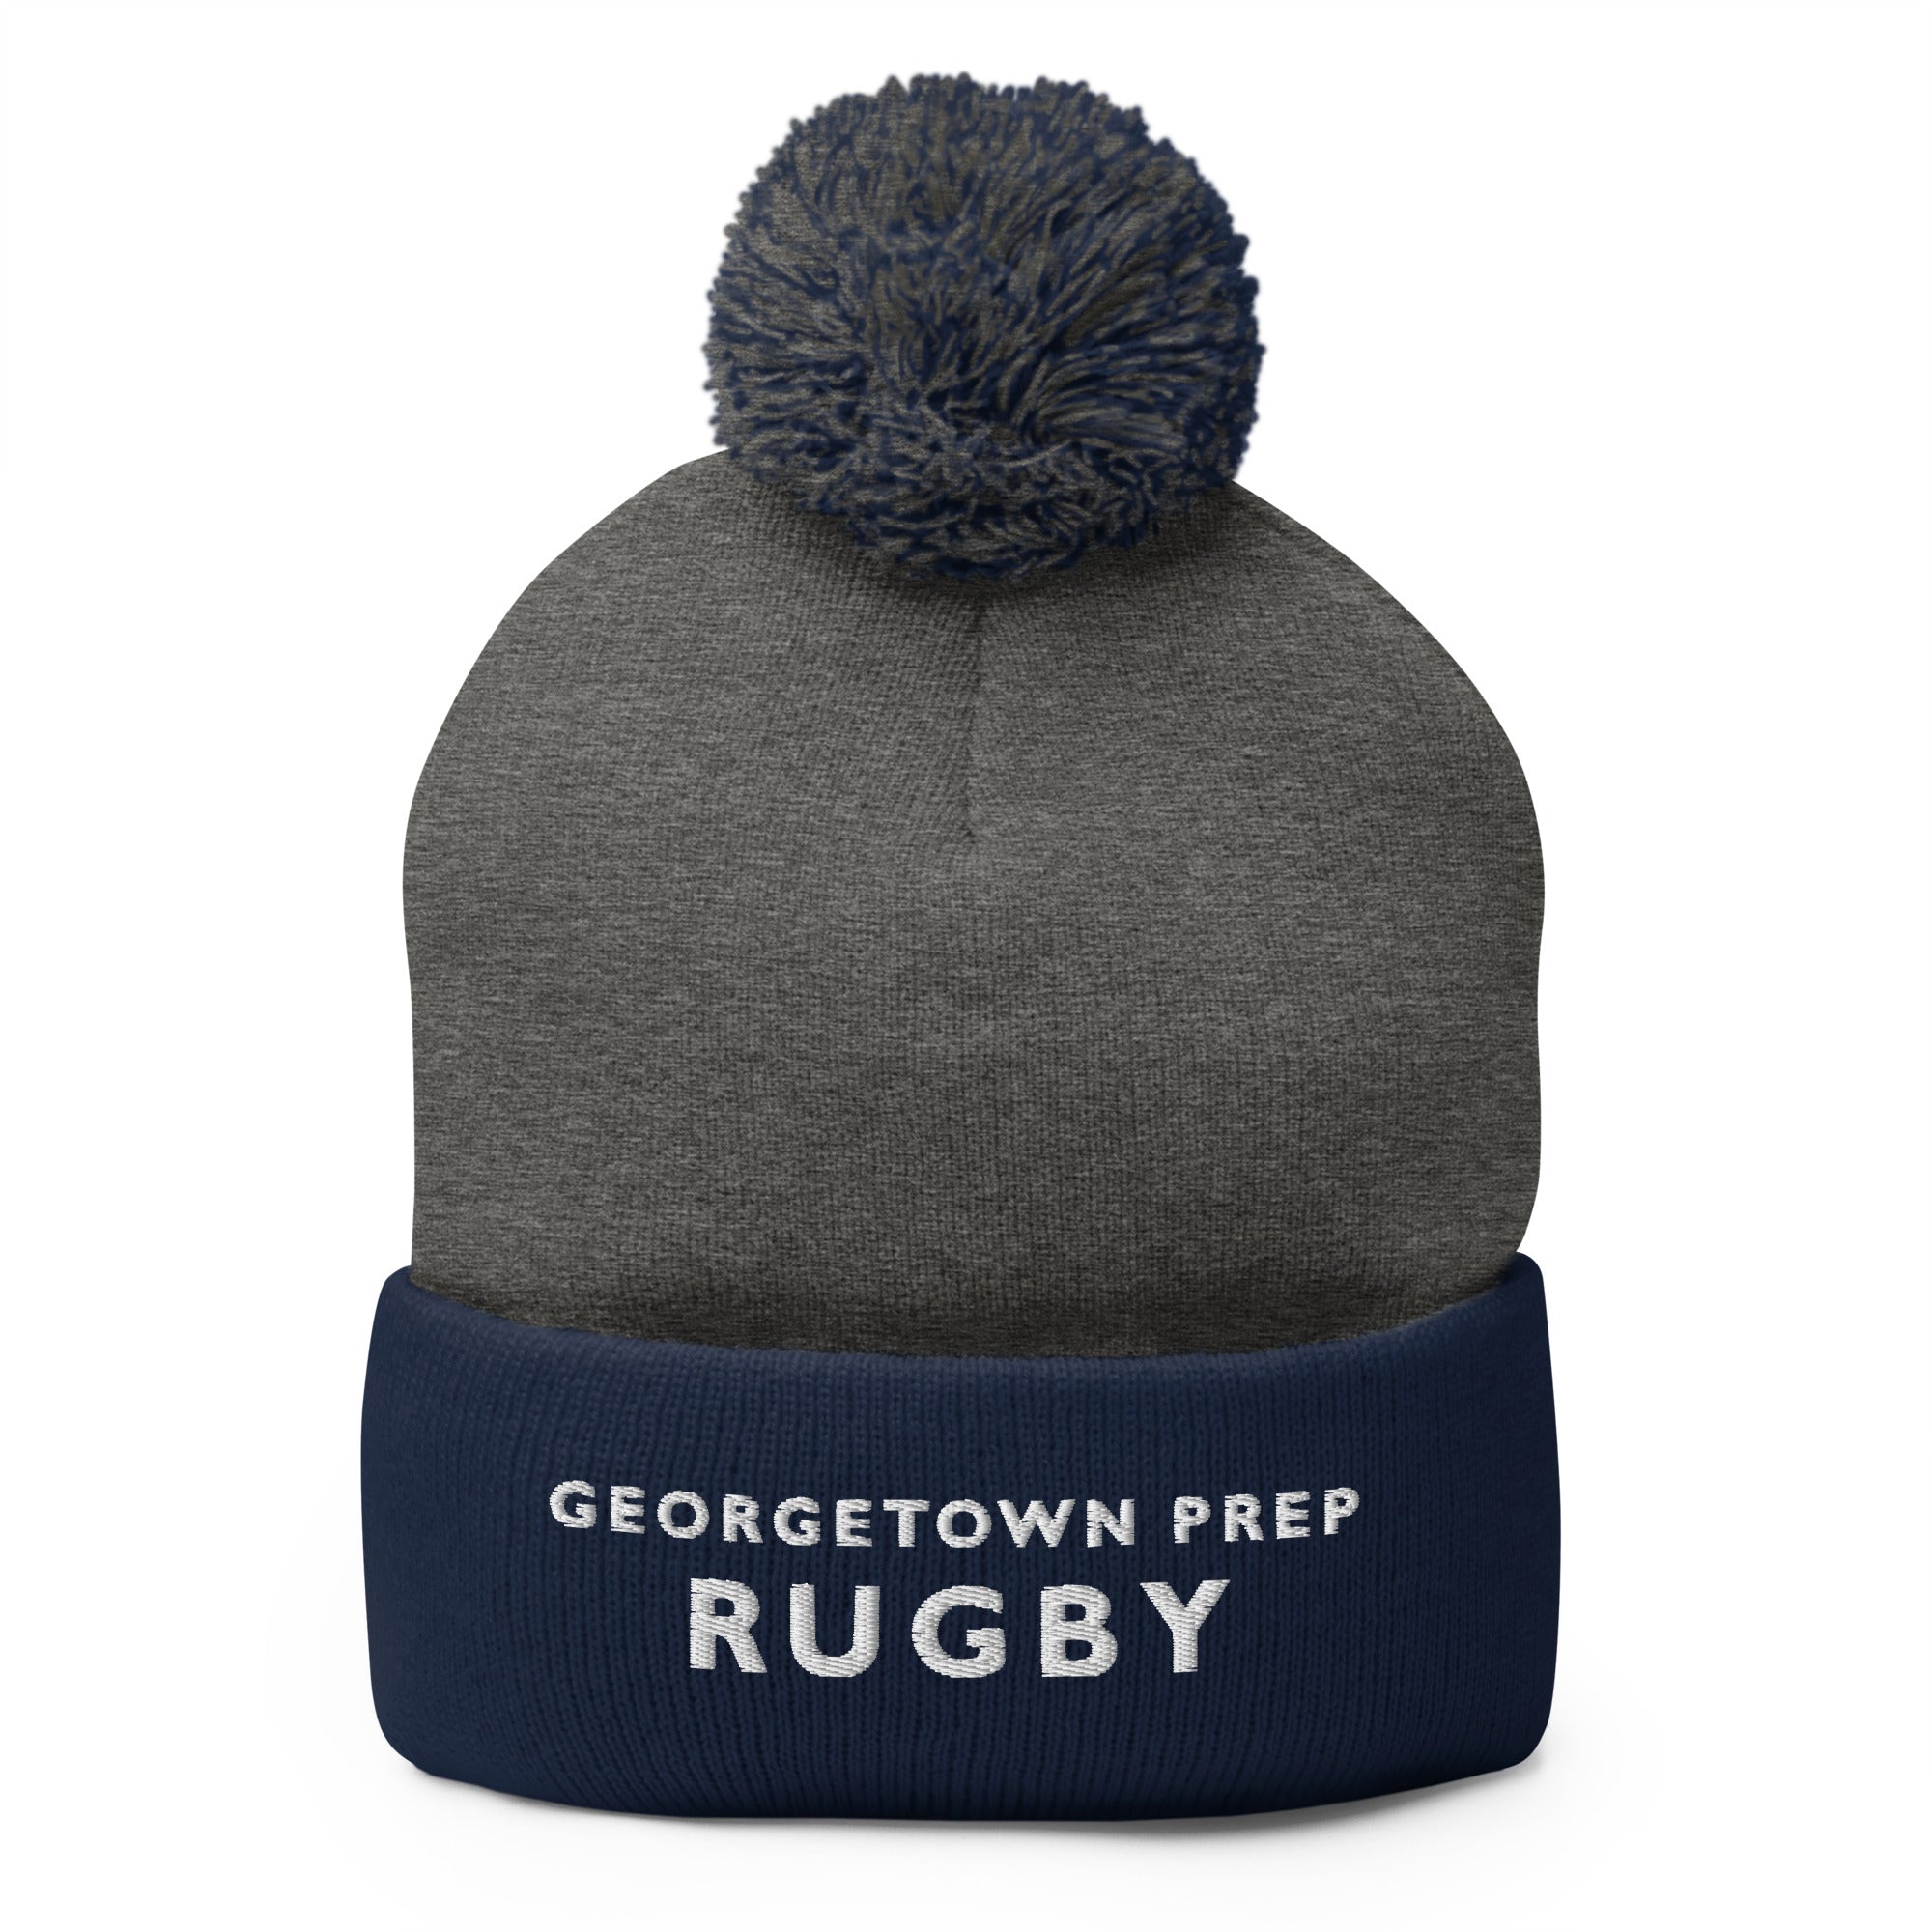 Rugby Imports Georgetown Prep Pom Beanie